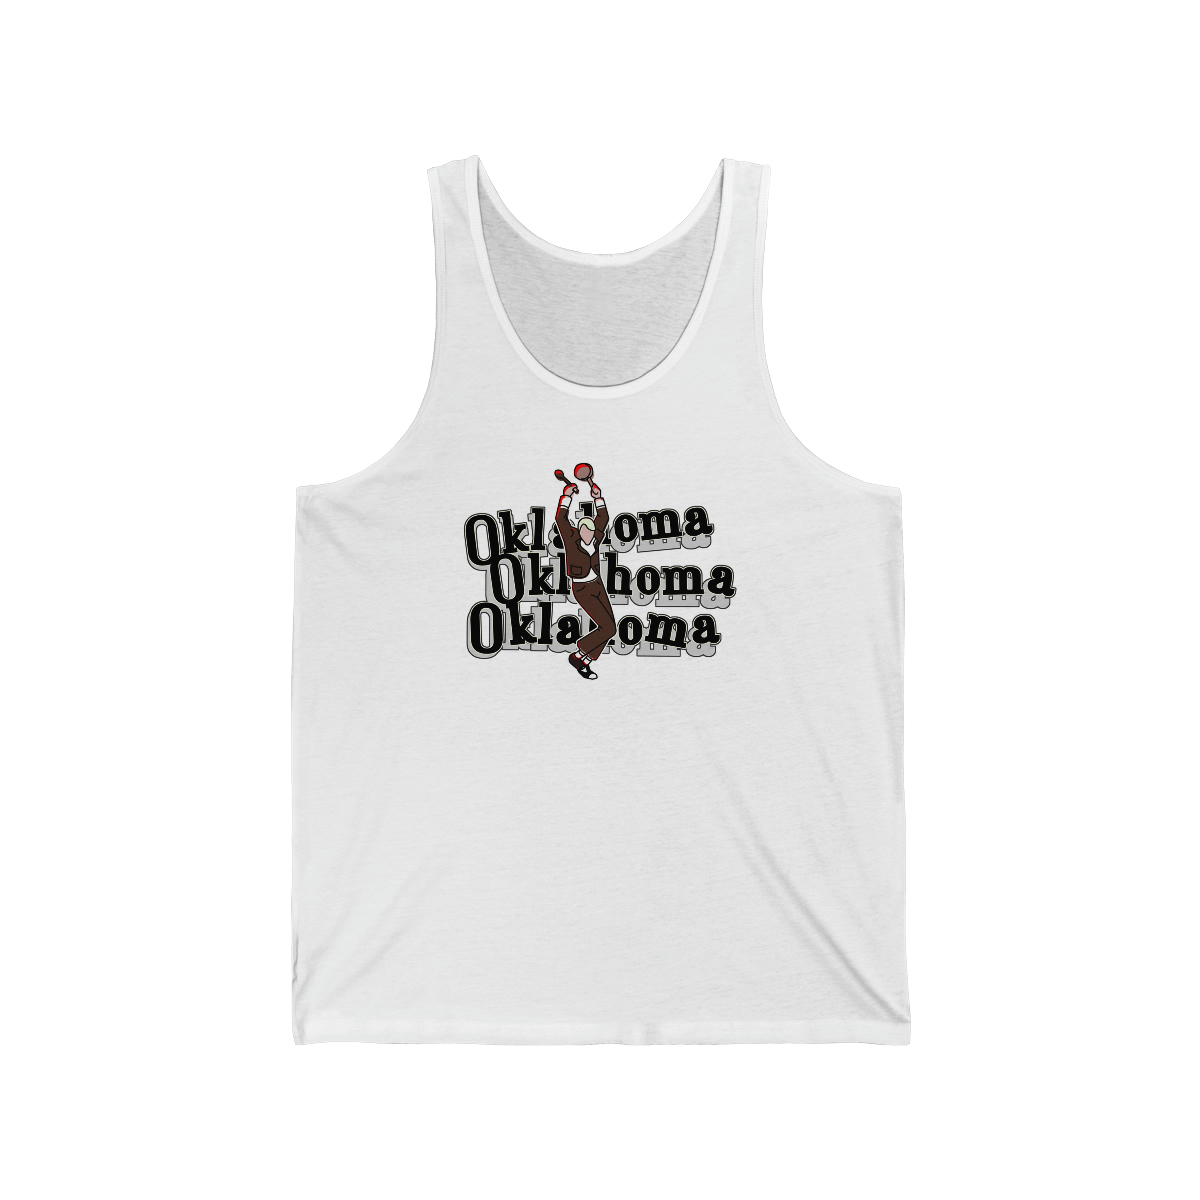 Oklahoma! (light shirts) - Unisex Jersey Tank